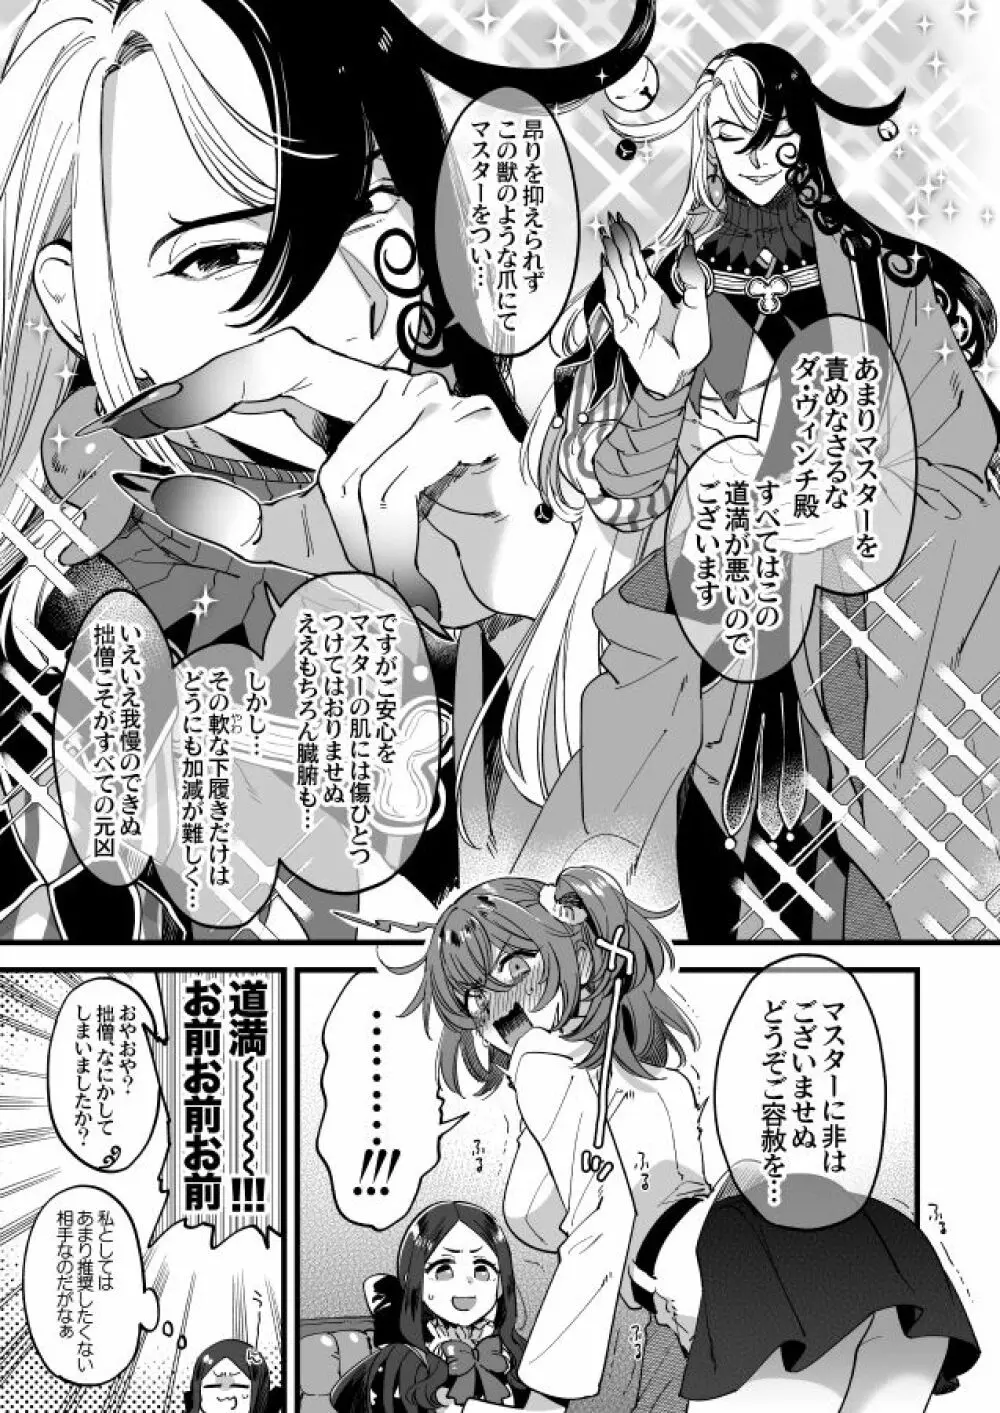 Hei dearin guda ♀/-dō guda ♀ rogu)fate/Grand Order) - page30